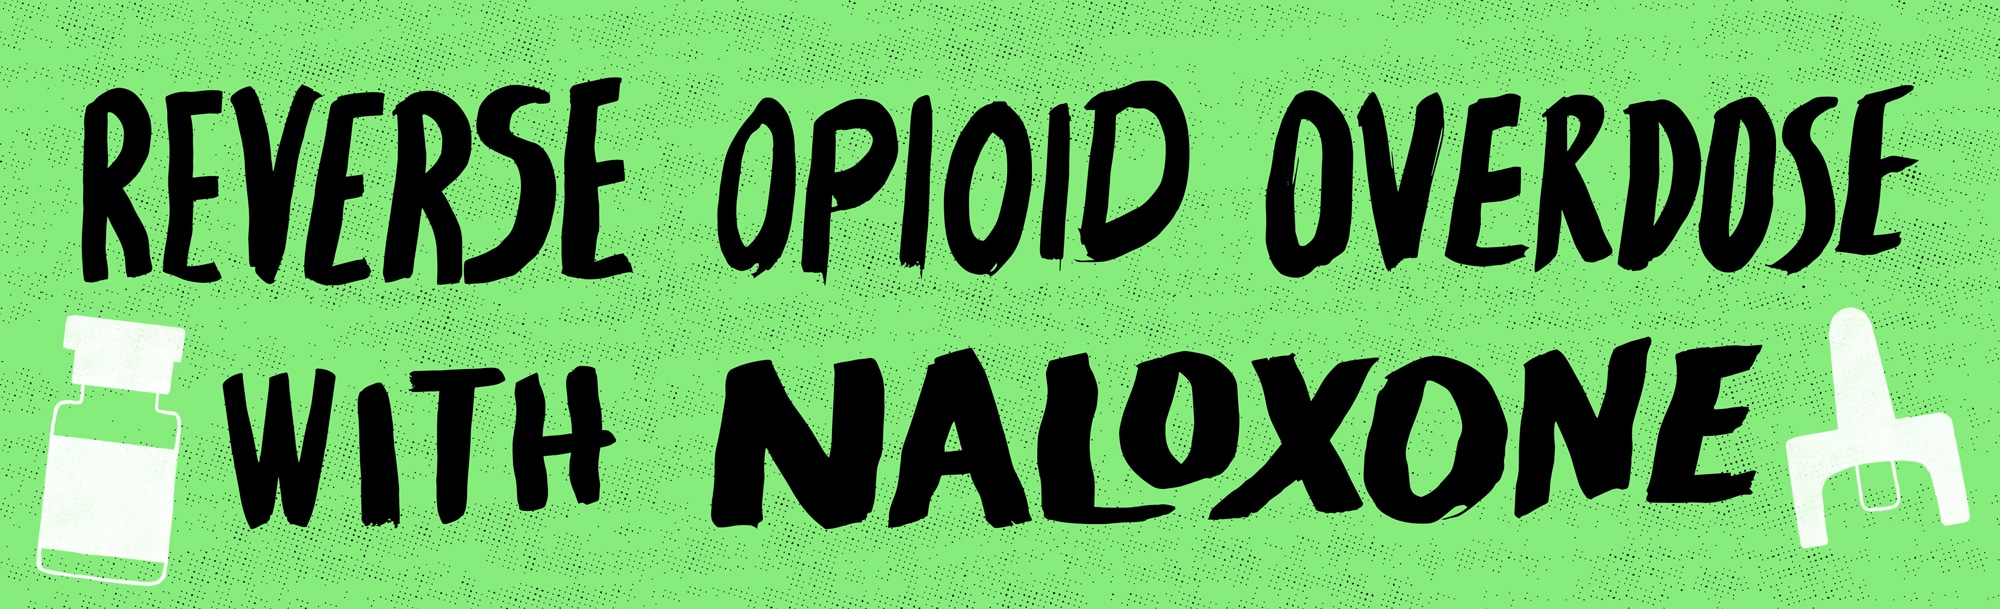 Reverse opioid overdose with Naloxone